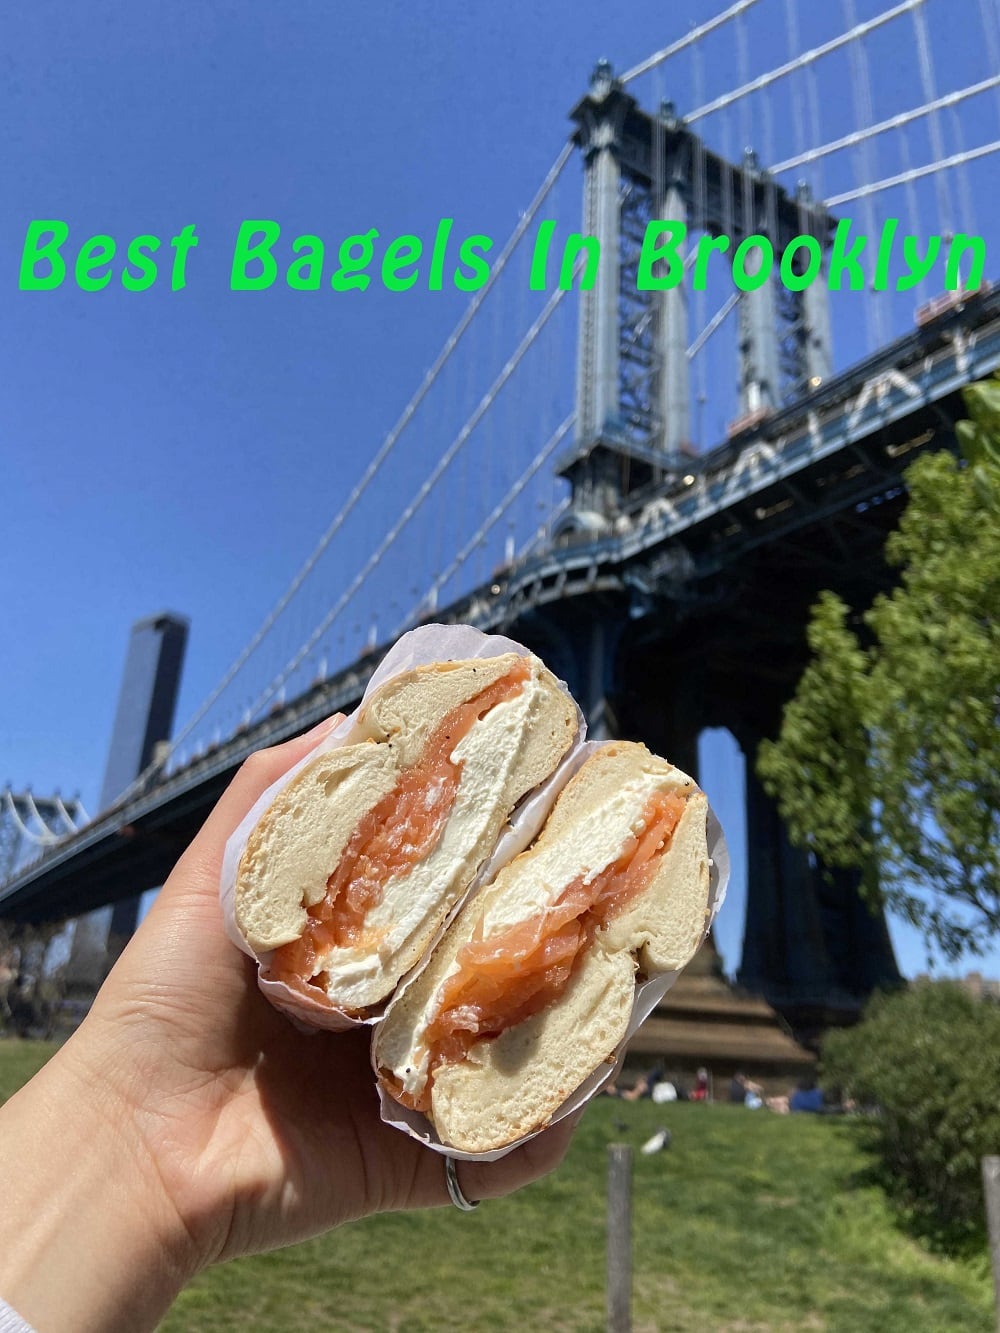 Lox and Cream Cheese Bagel by the Manhattan Bridge in Brooklyn